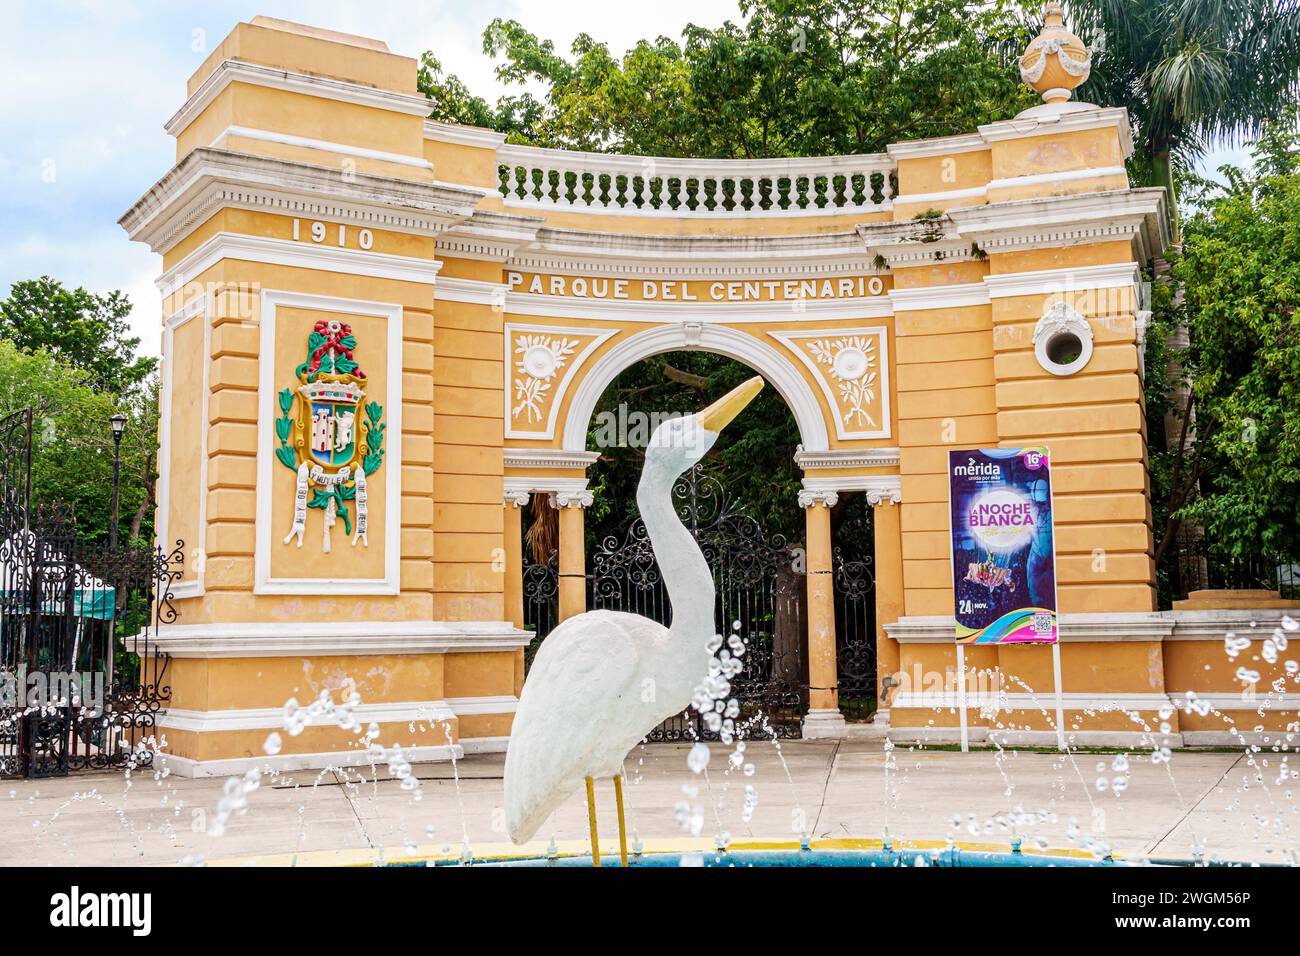 Merida Mexico,Parque Zoologico del Centenario centennial public park,entrance arch,public fountain white egret bird statue,coat of arms shield city,Me Stock Photo